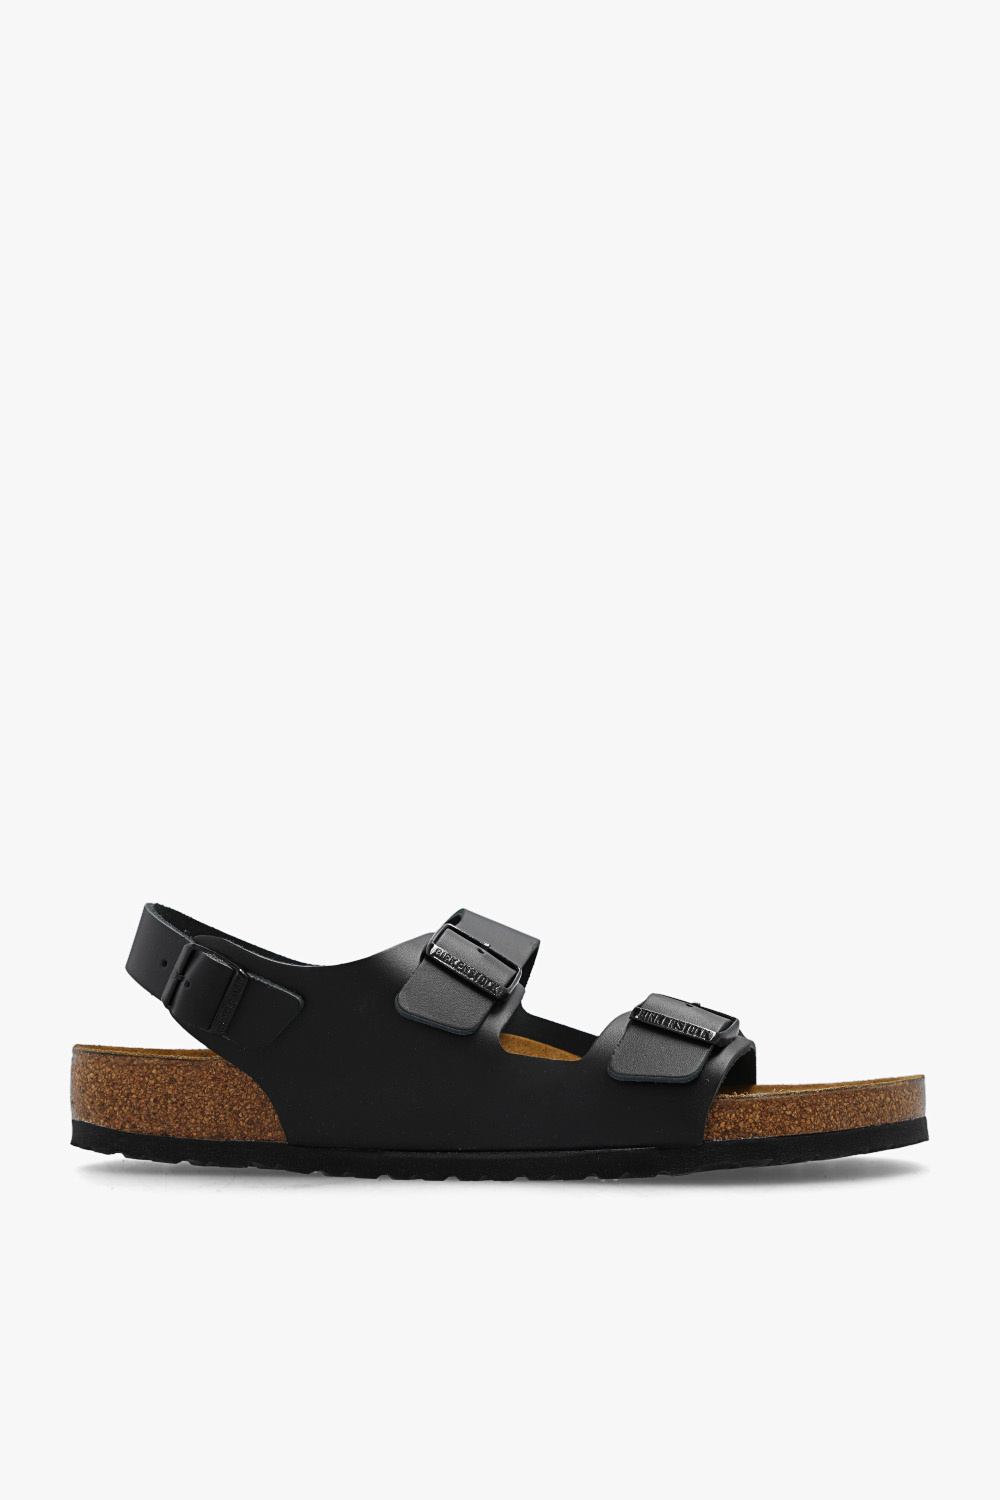 IetpShops Brazil - Black 'Milano BS' sandals Birkenstock - Ankle